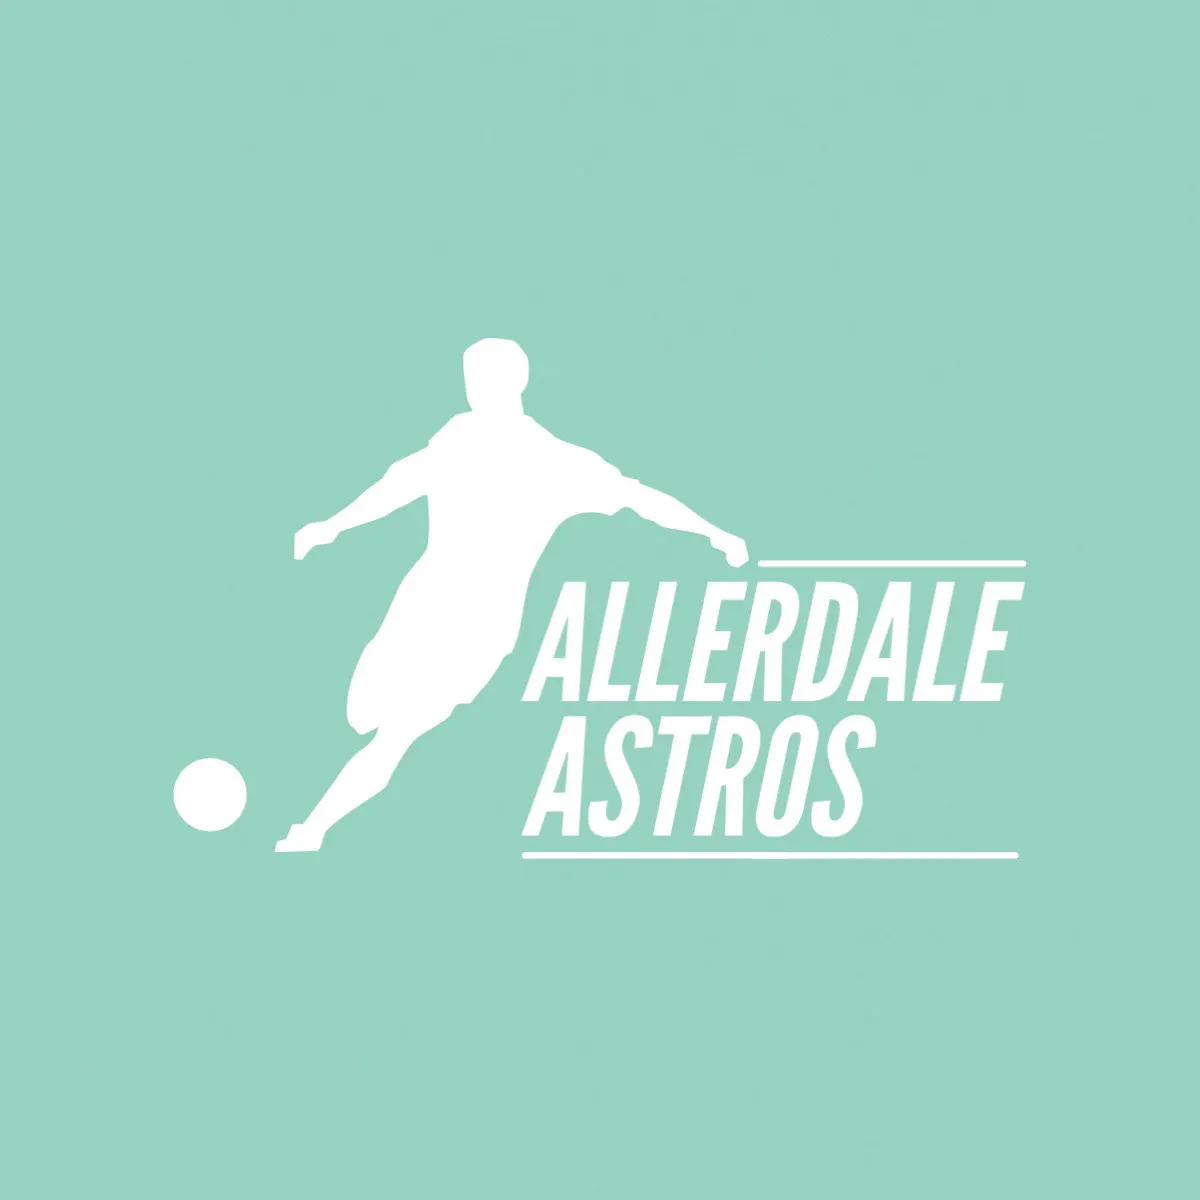 Teal White Allerdale Astros Football Logo